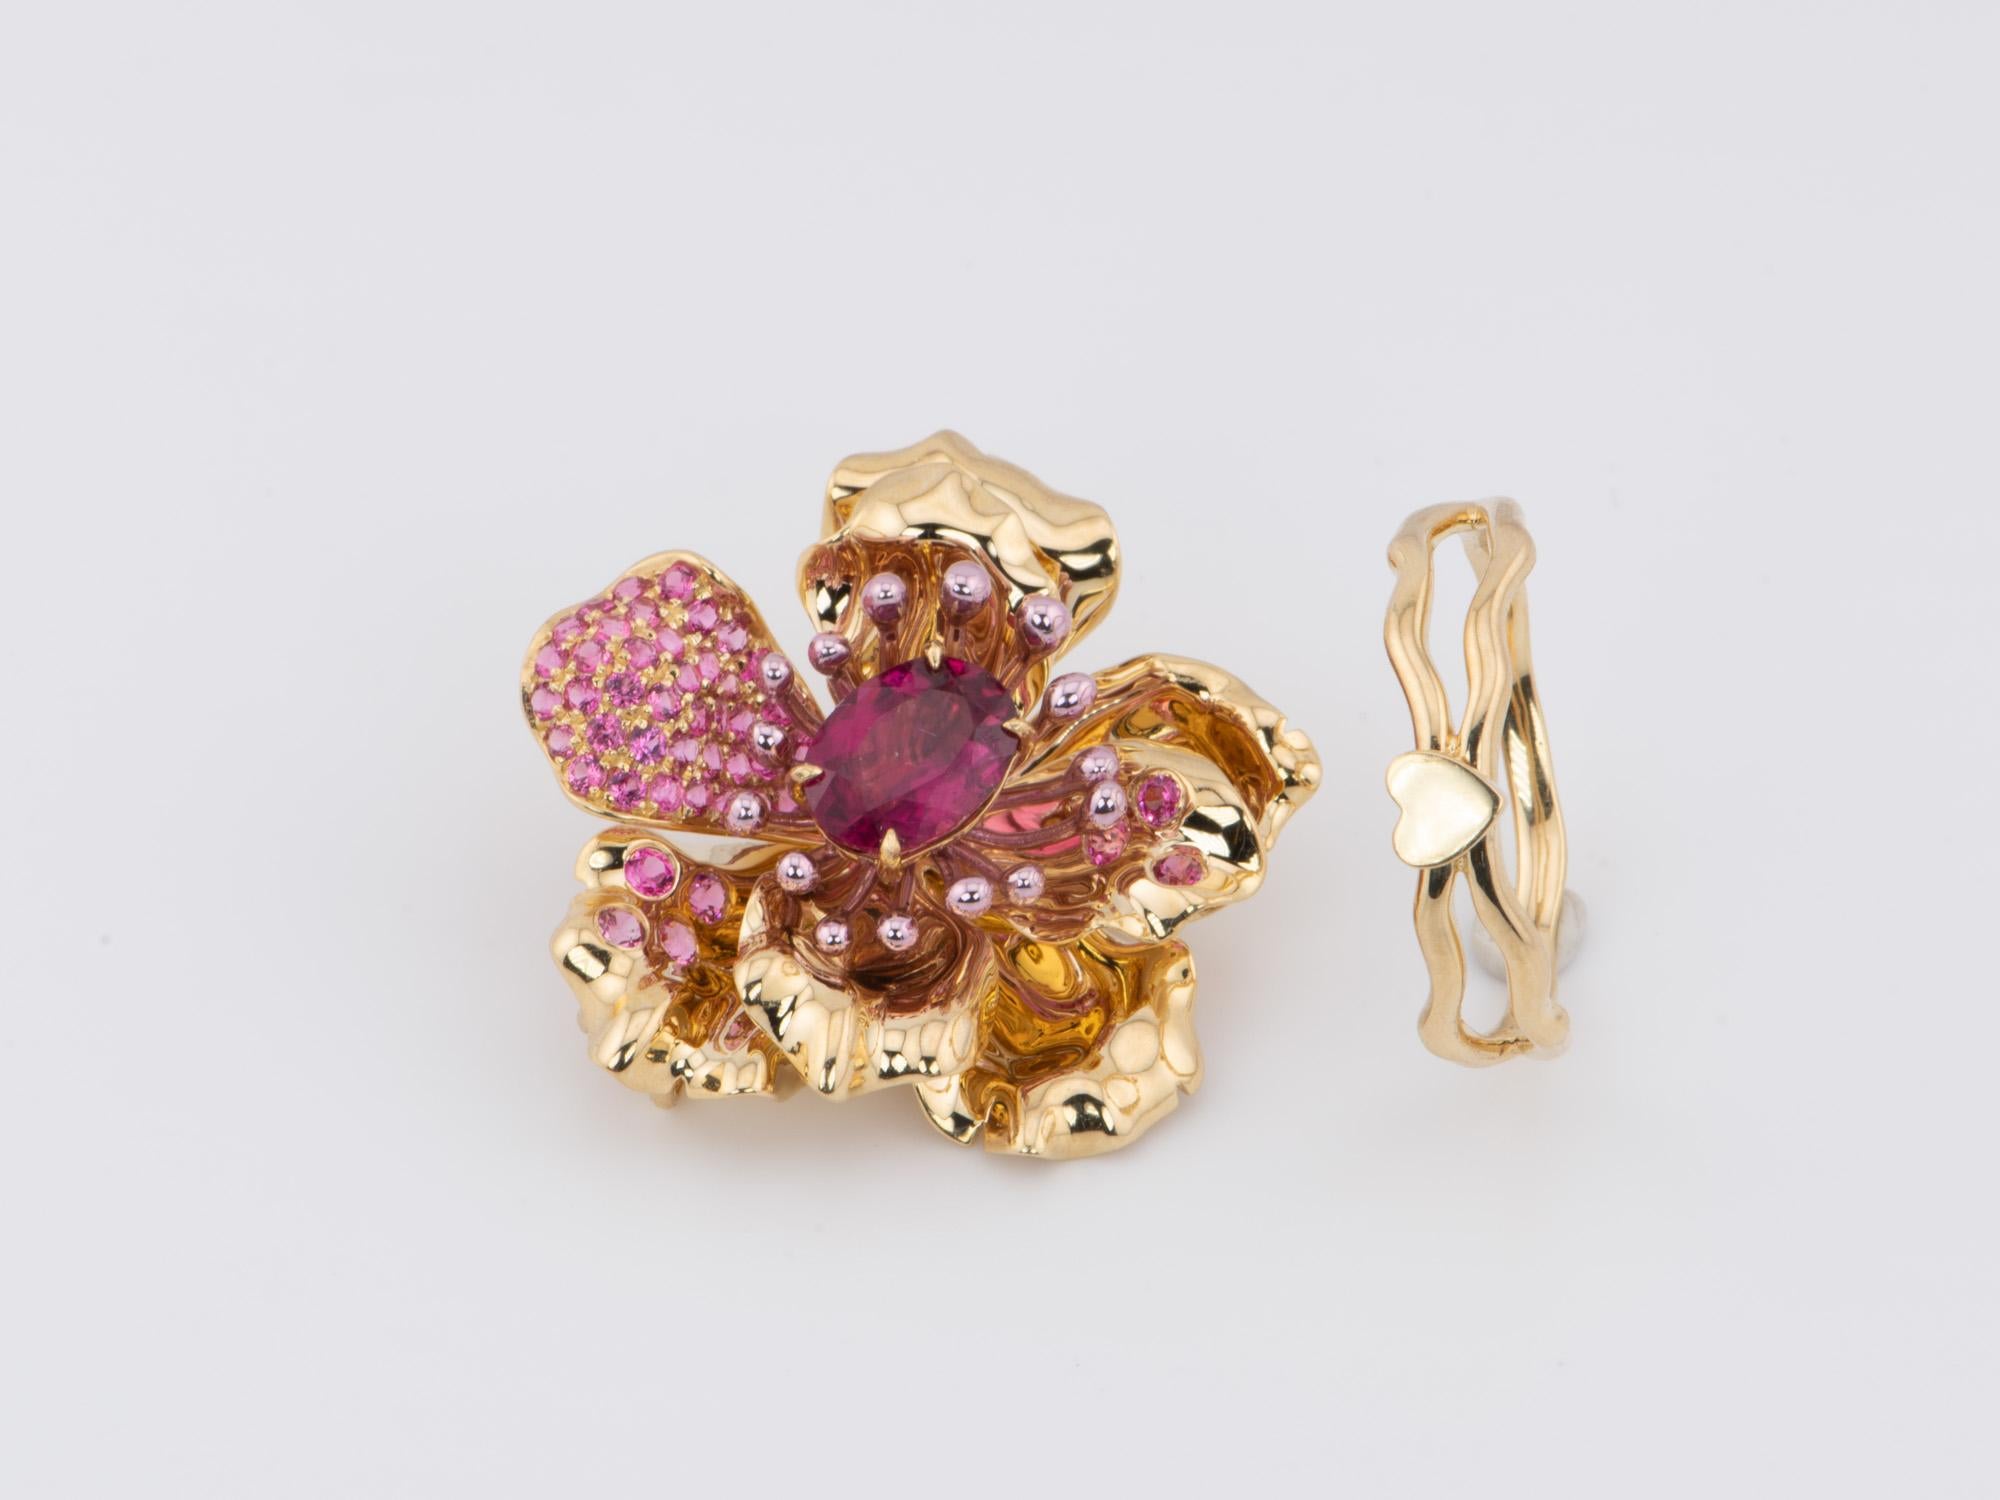 Art Jewelry Rubellite Tourmaline Center Flower Ring / Pendant 18K Gold R6641 For Sale 11